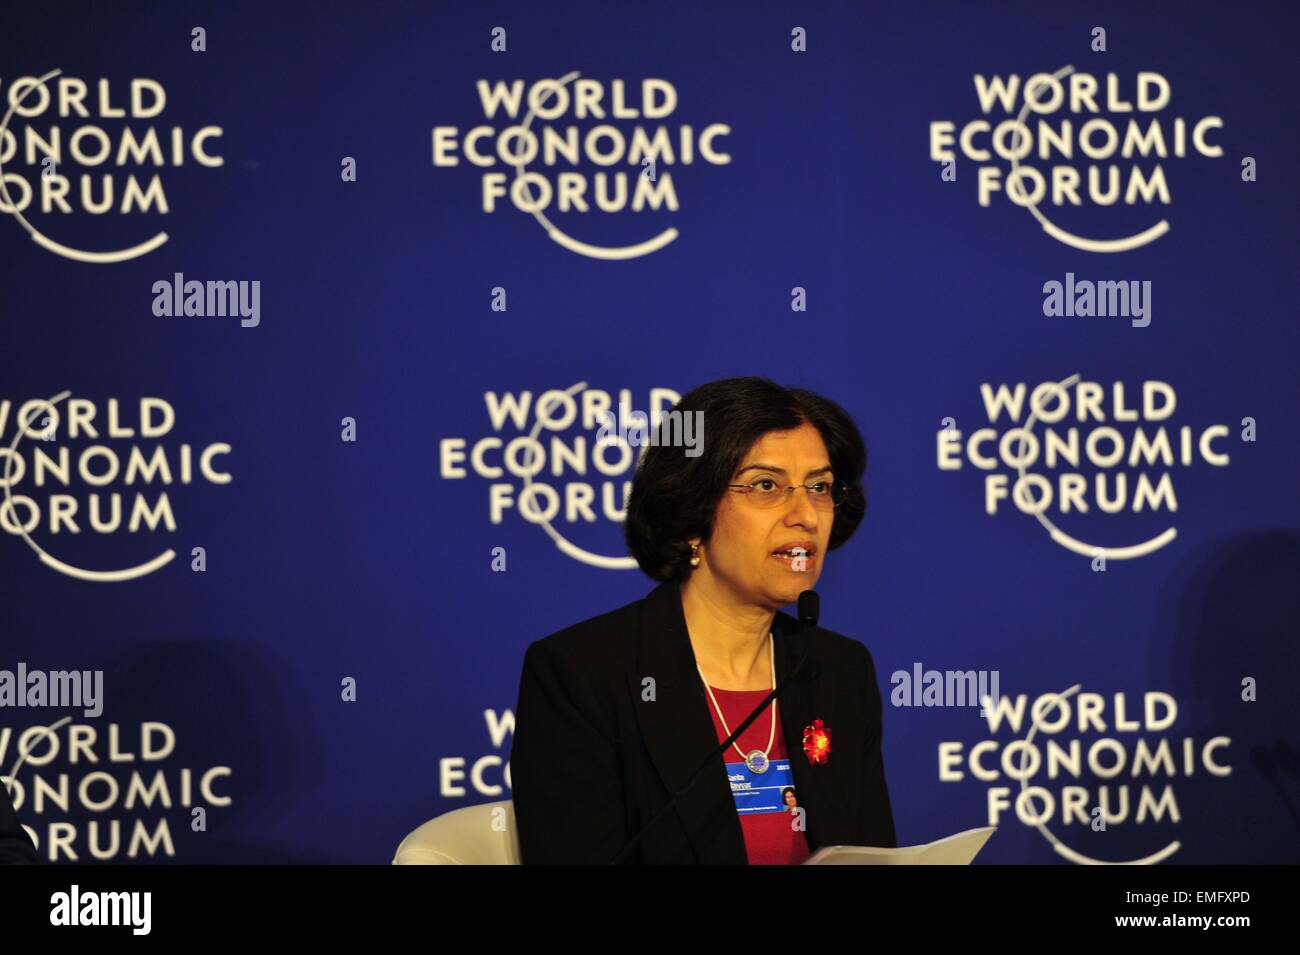 Jakarta, Indonésie. Apr 21, 2015. Directeur général du Forum économique mondial USA Sarita Nayyar assiste au Forum économique mondial sur l'Asie de 2015 à Jakarta, Indonésie, le 21 avril 2015. Credit : Zulkarnain/Xinhua/Alamy Live News Banque D'Images